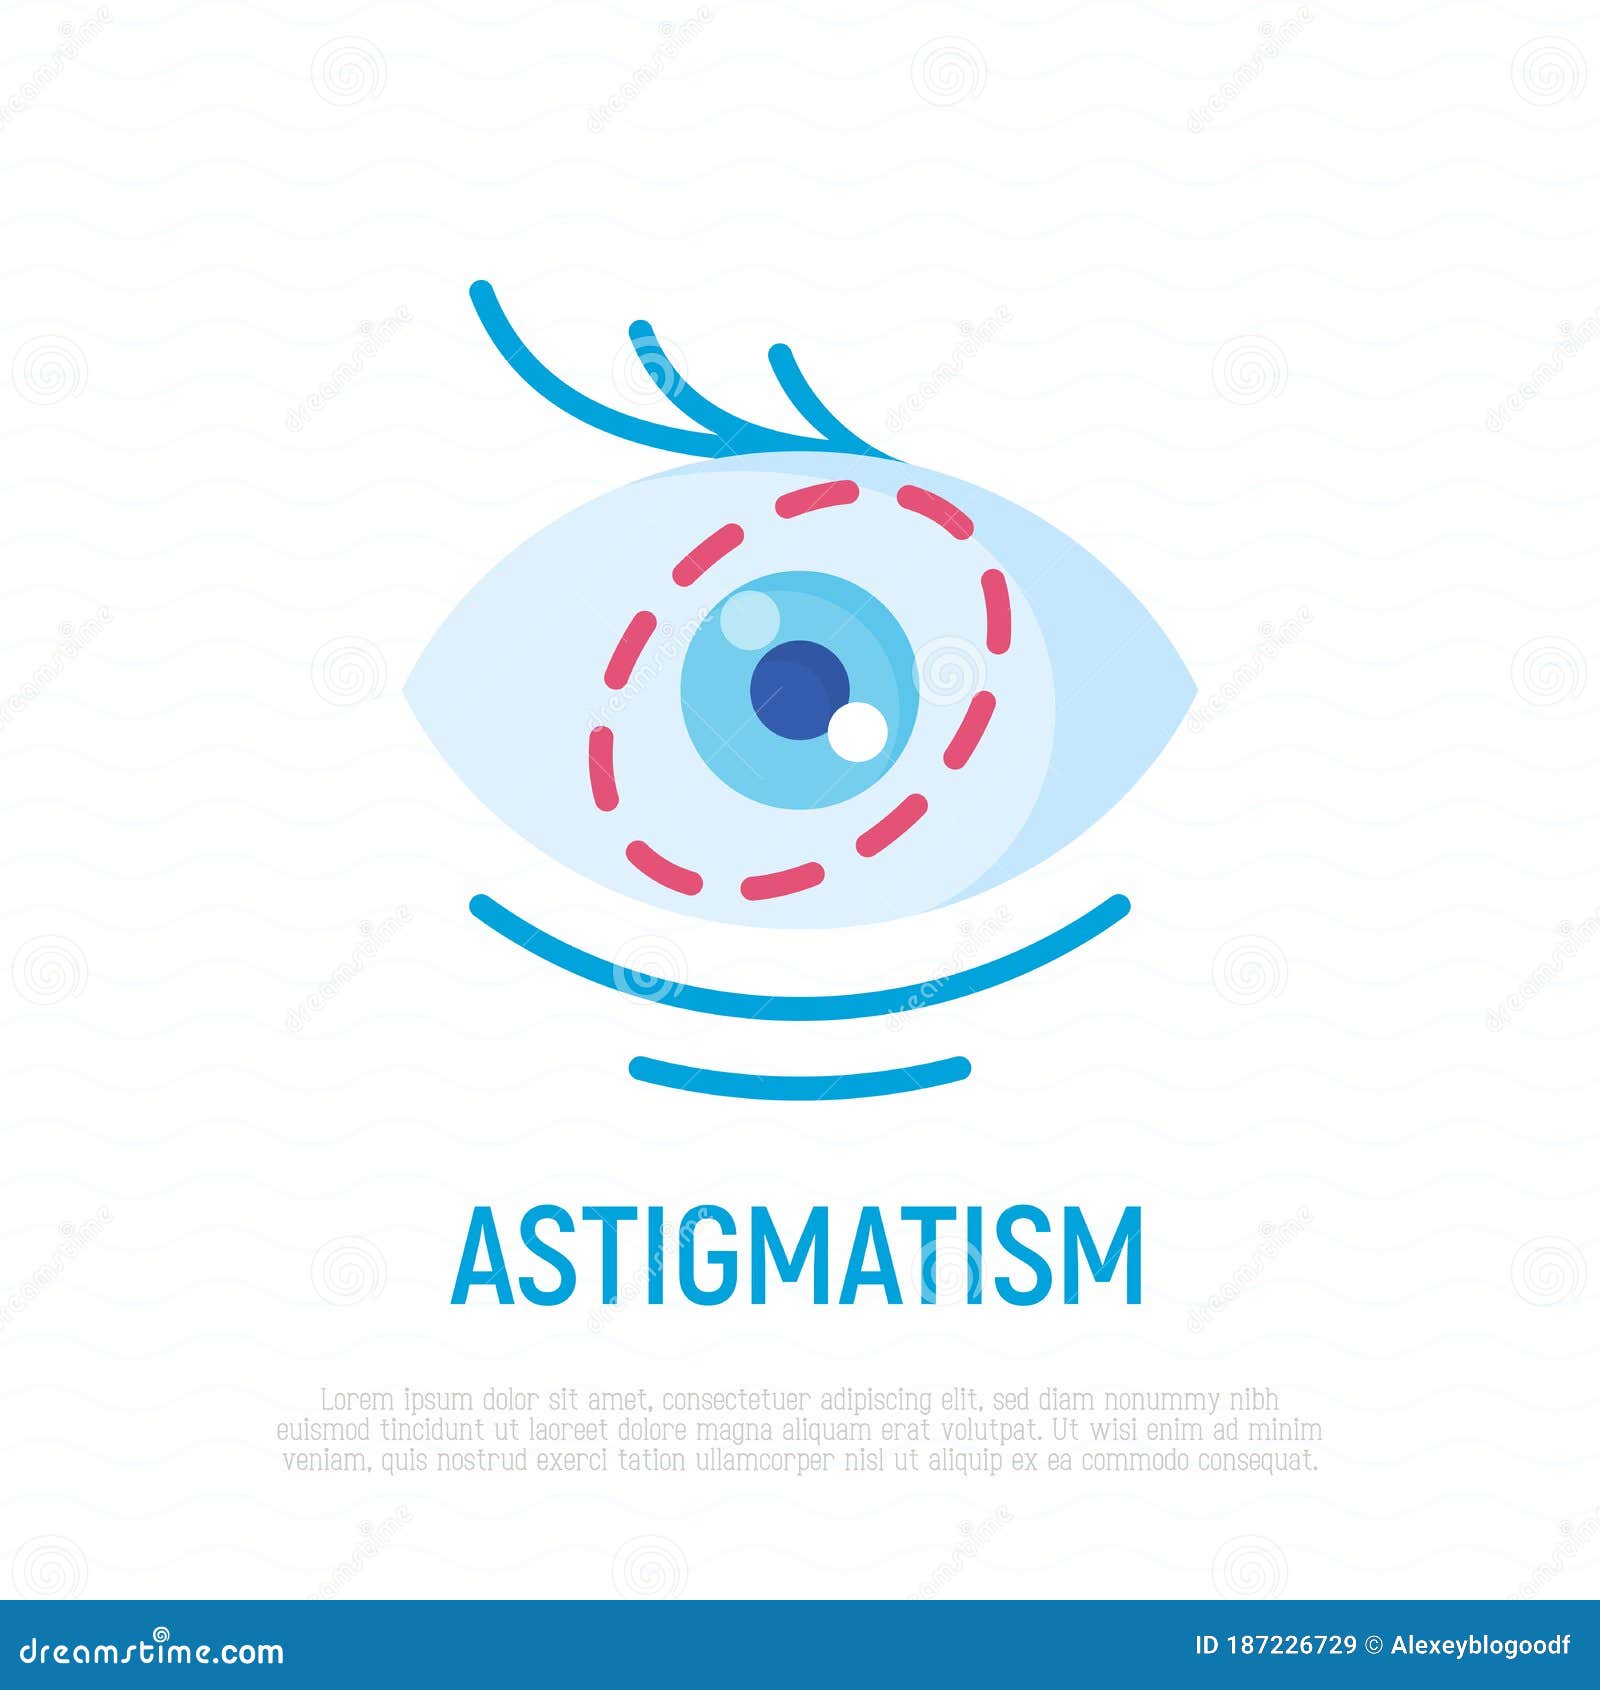 astigmatism oftalmologic